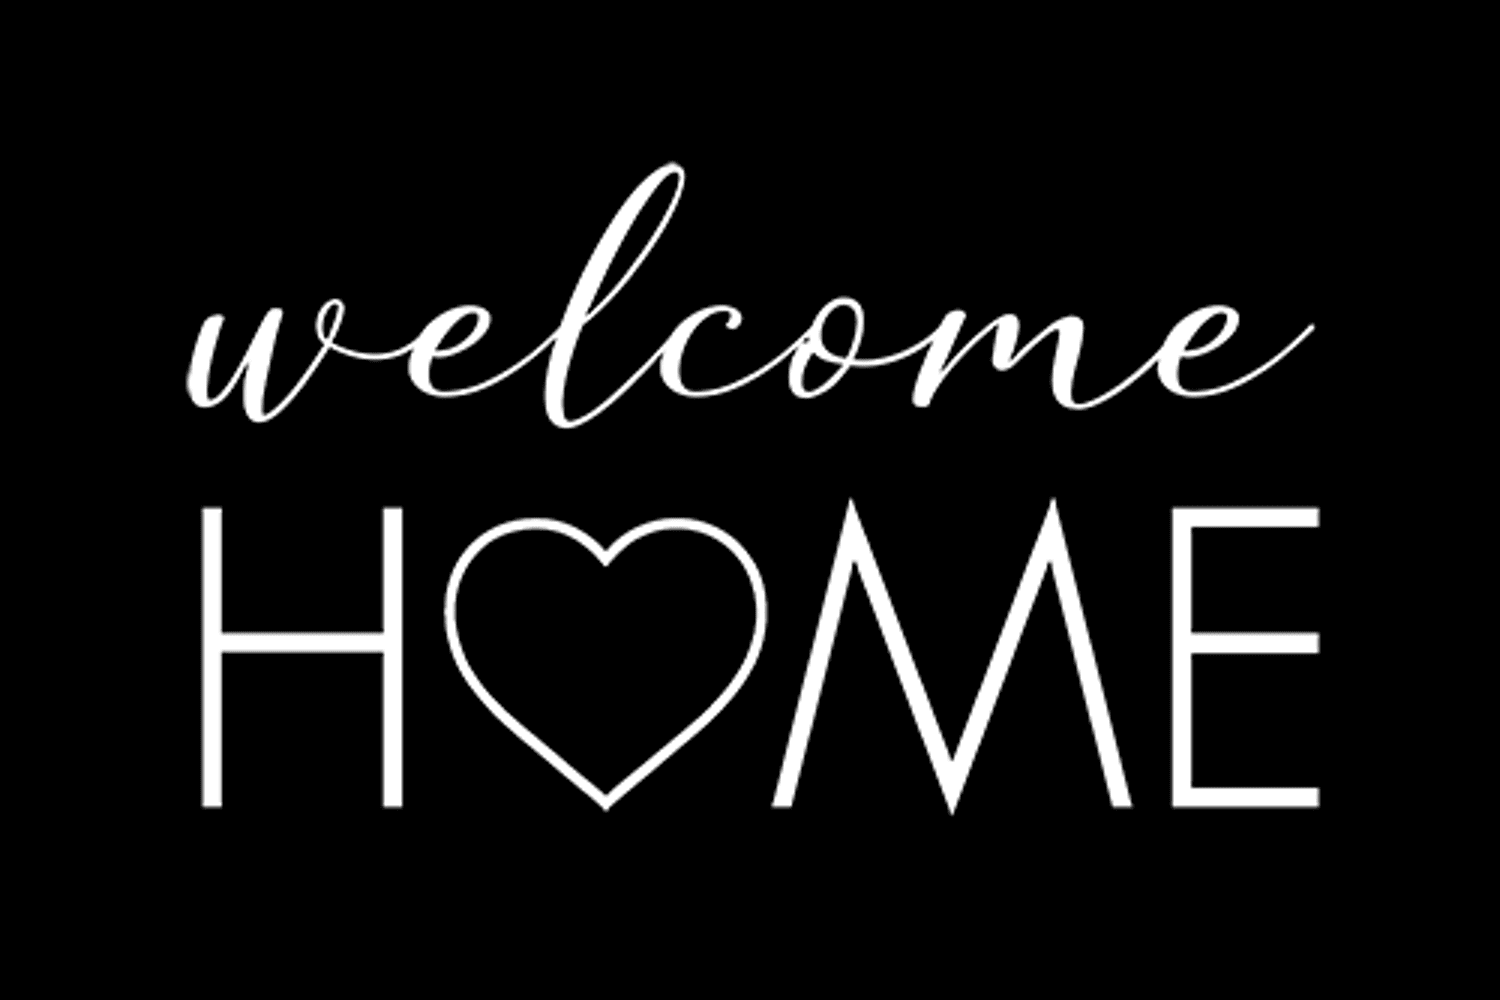 welcome-home-logo